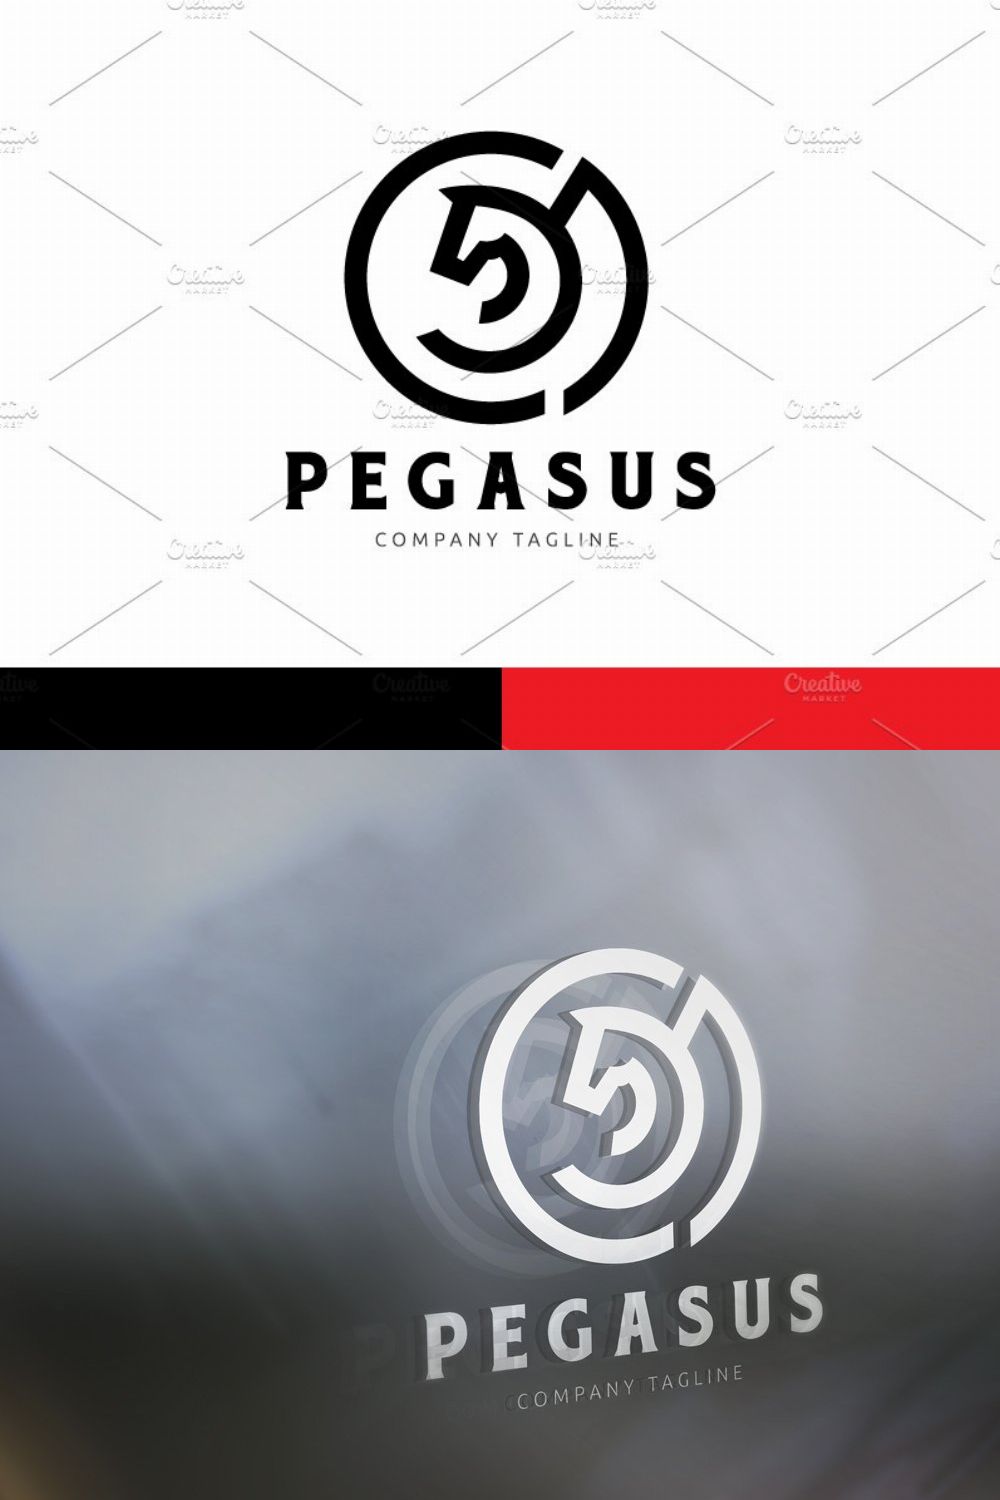 Pegasus Logo pinterest preview image.